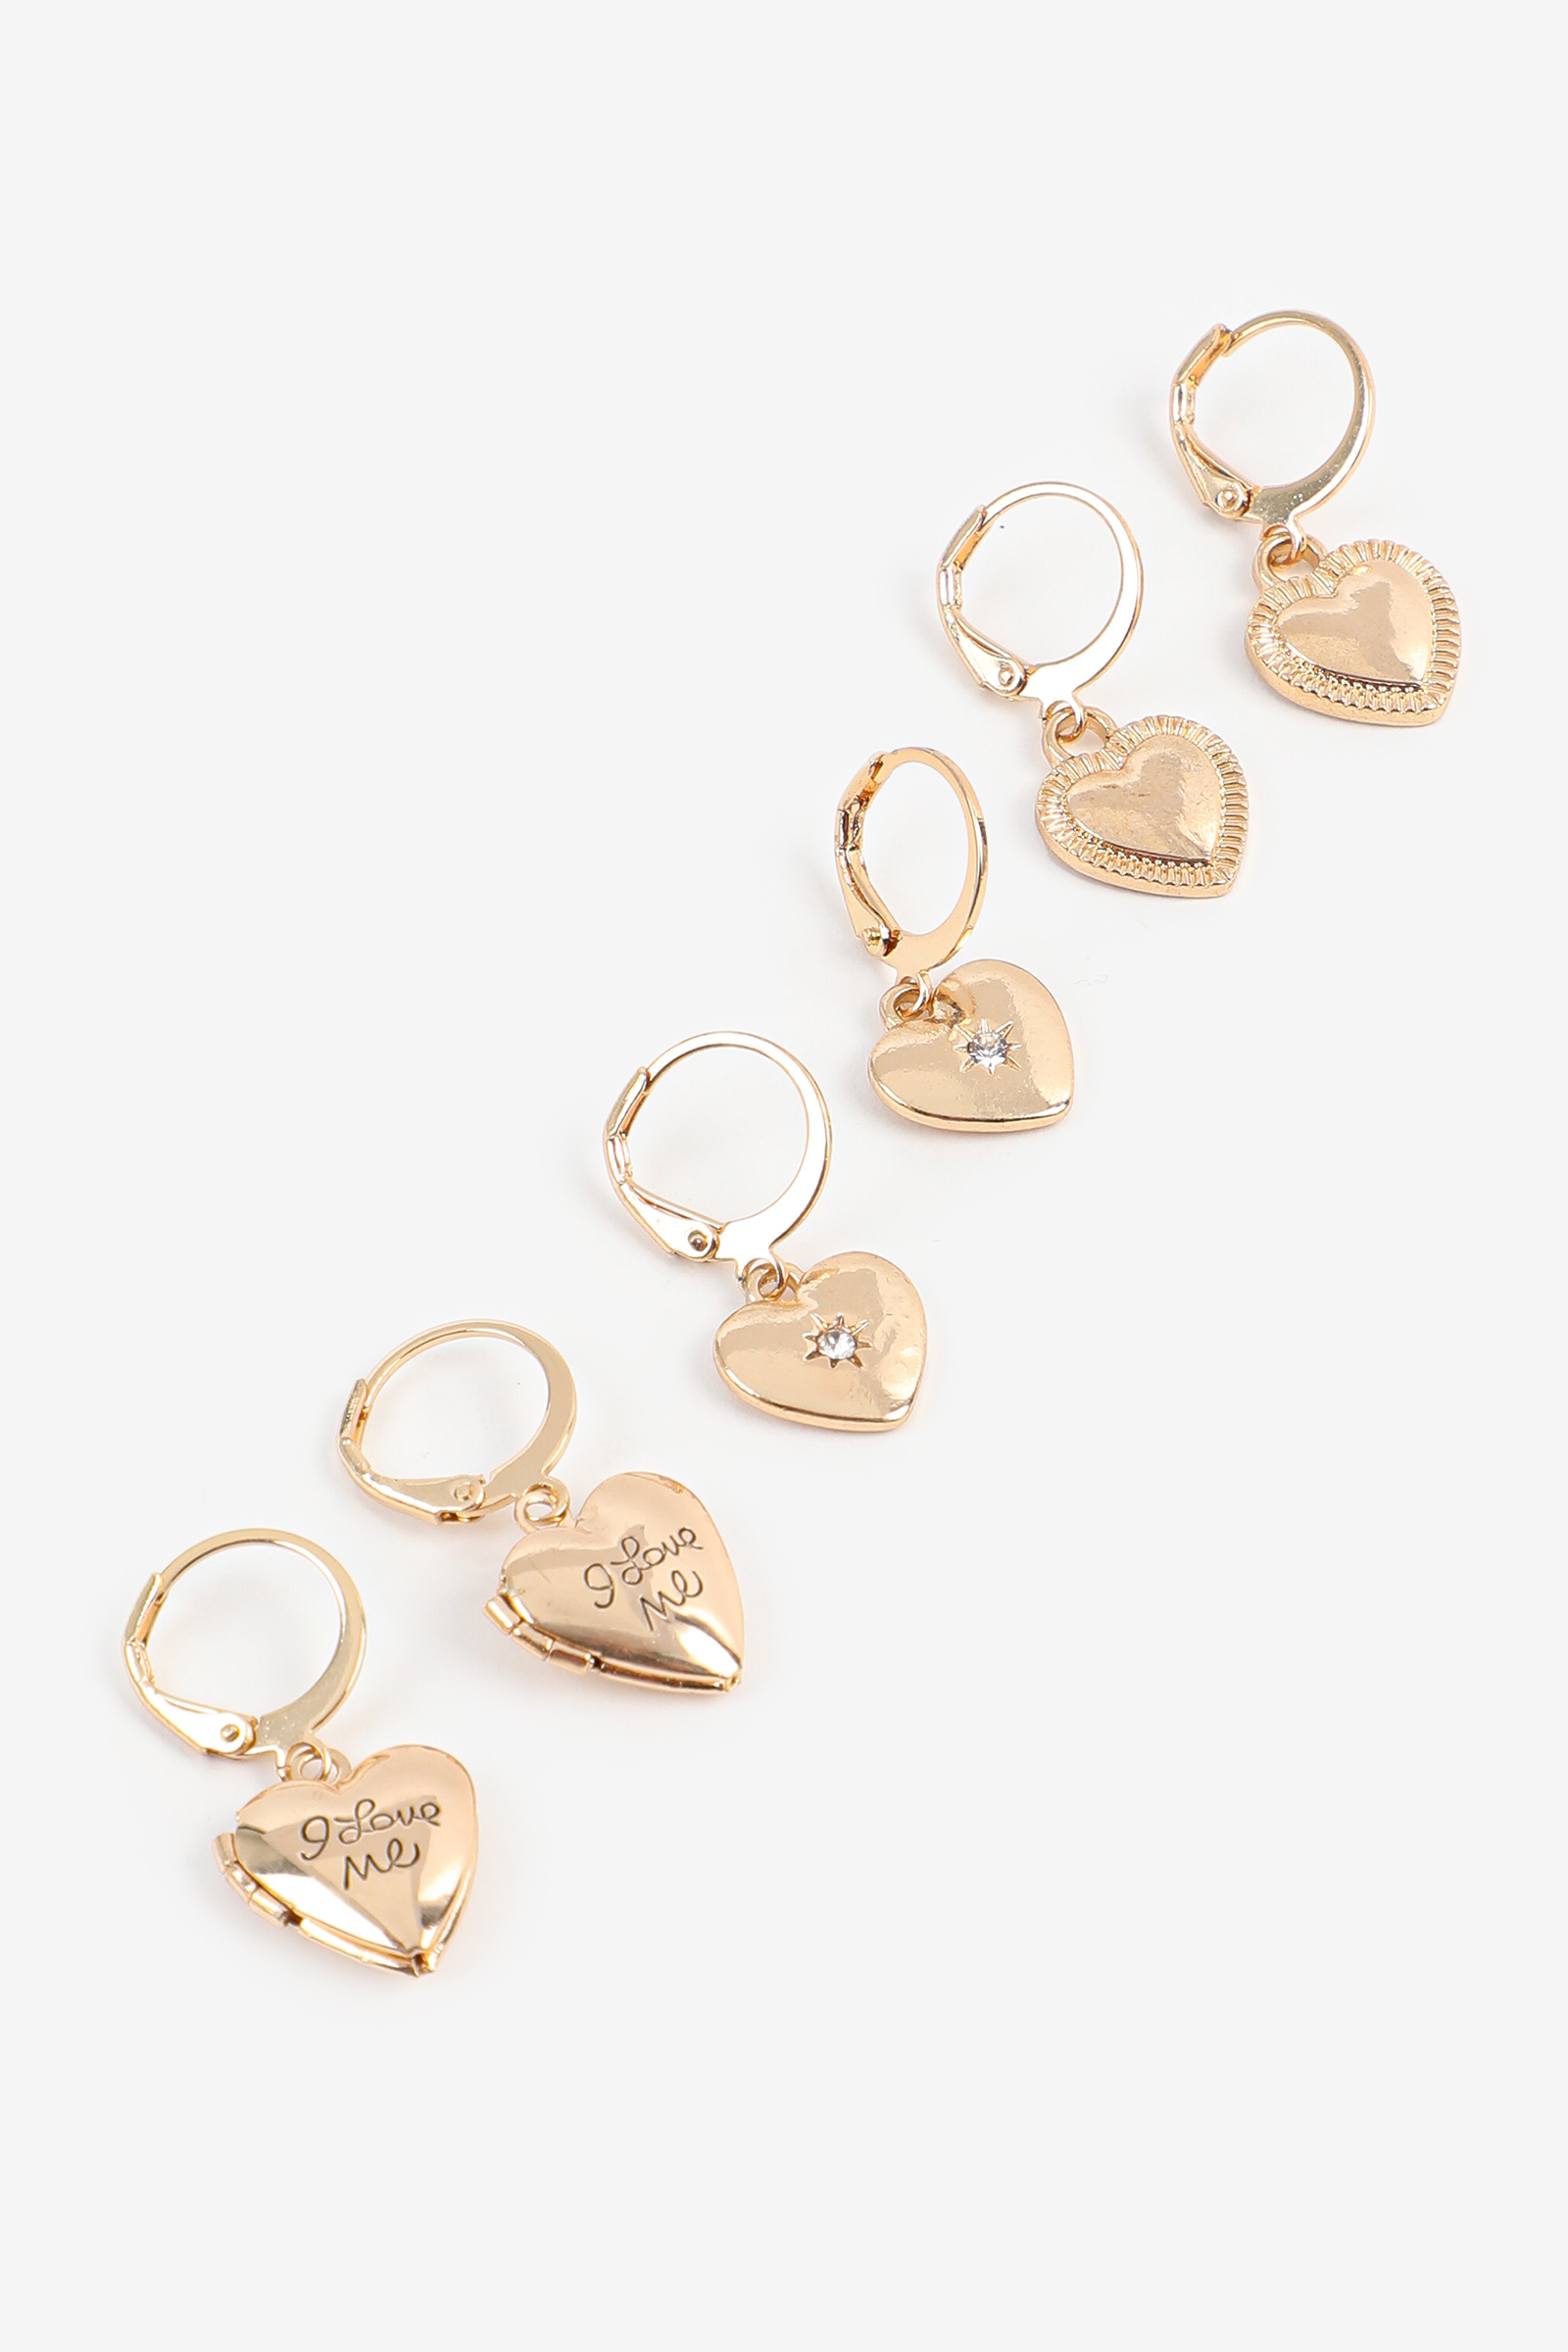 Ardene Pack of Assorted Heart Hoop Earrings in Gold | Stainless Steel